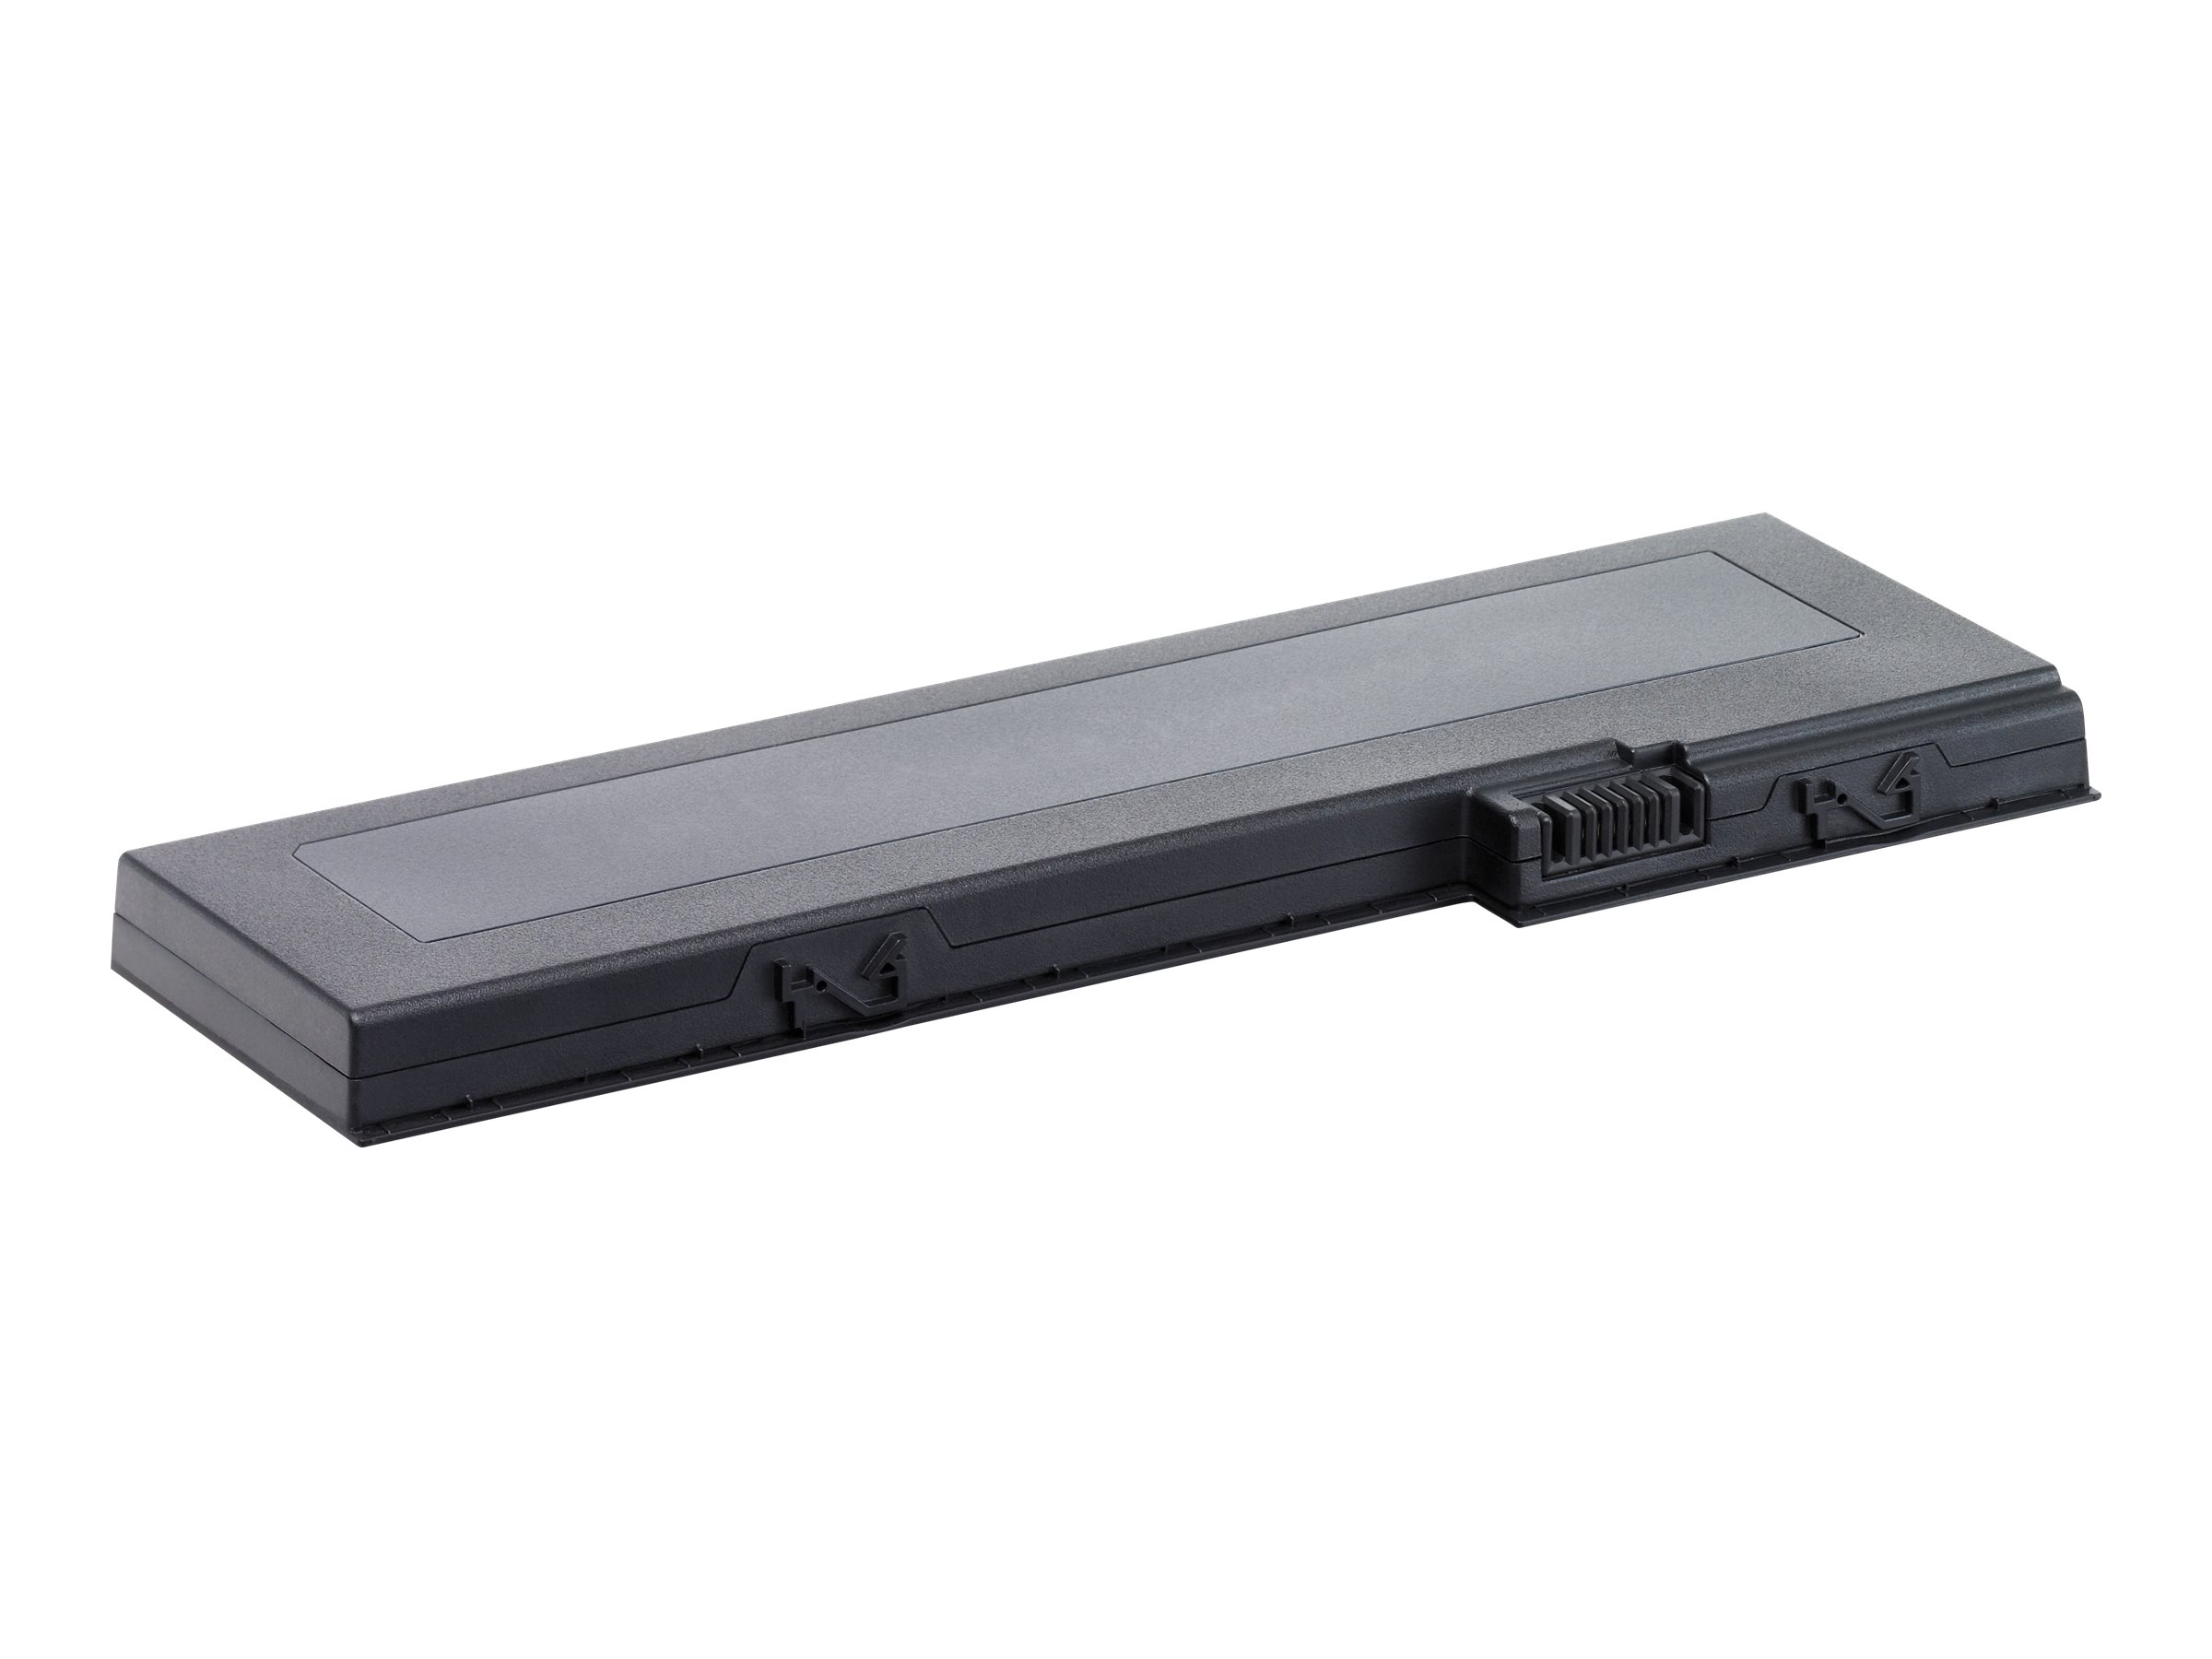 HP Primary - Laptop-Batterie - Lithium-Ionen - 6 Zellen - für HP 2710p; EliteBook 2730p, 2740p, 2760p